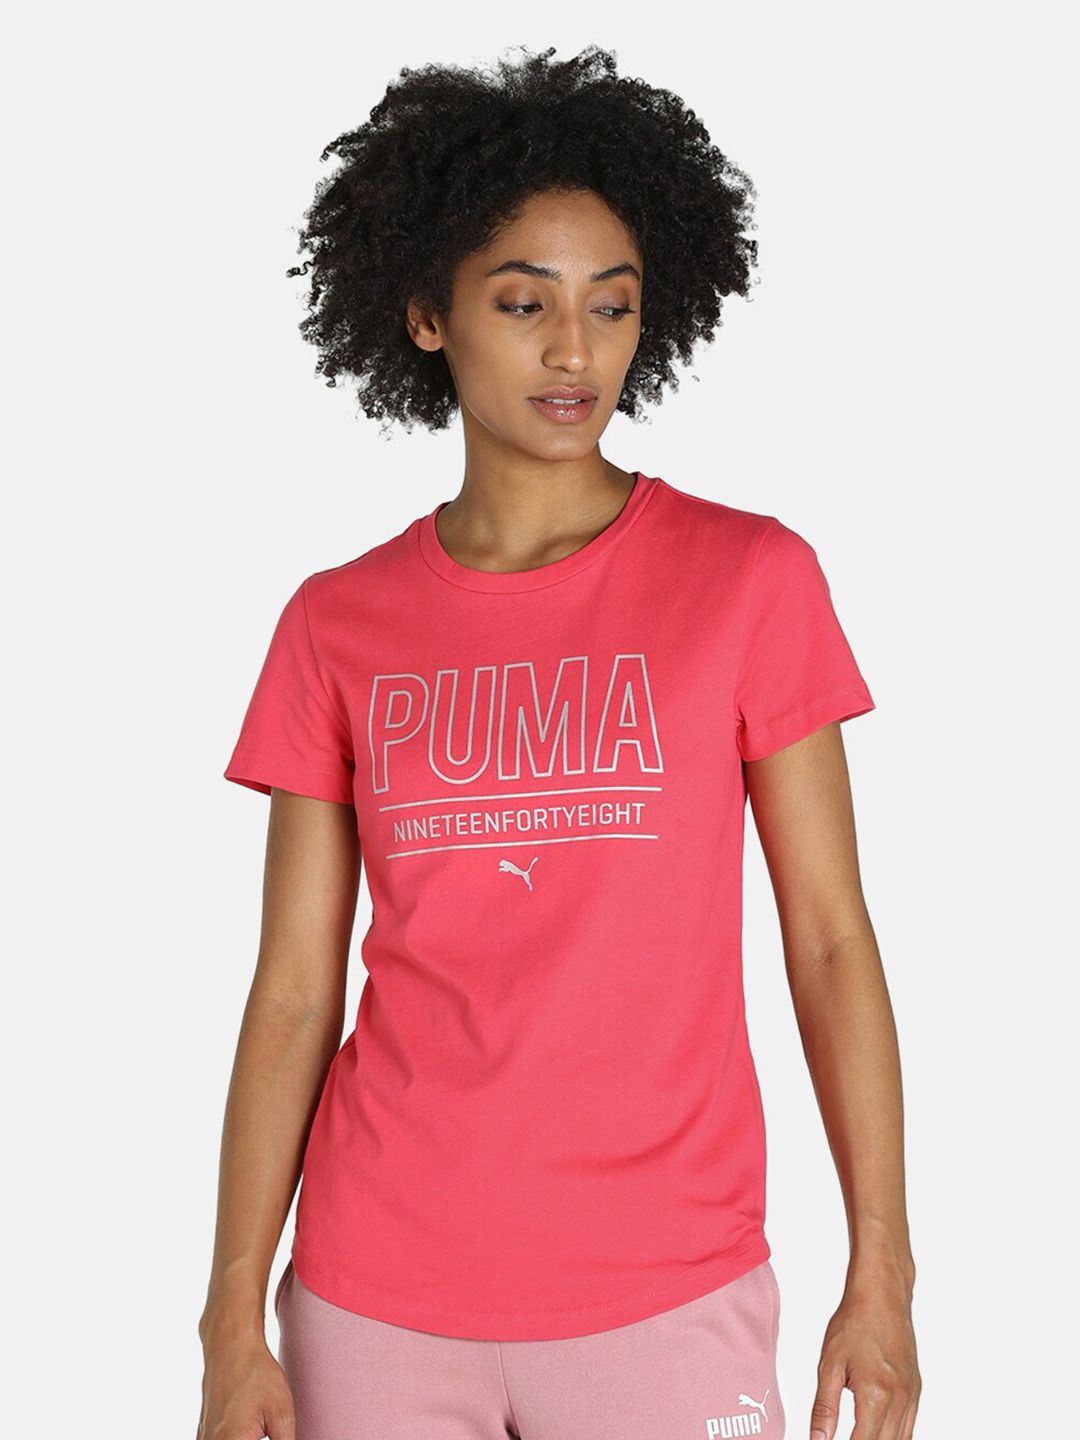 Puma Women Pink Brand Logo Printed Cotton Training or Gym T-shirt Price in India